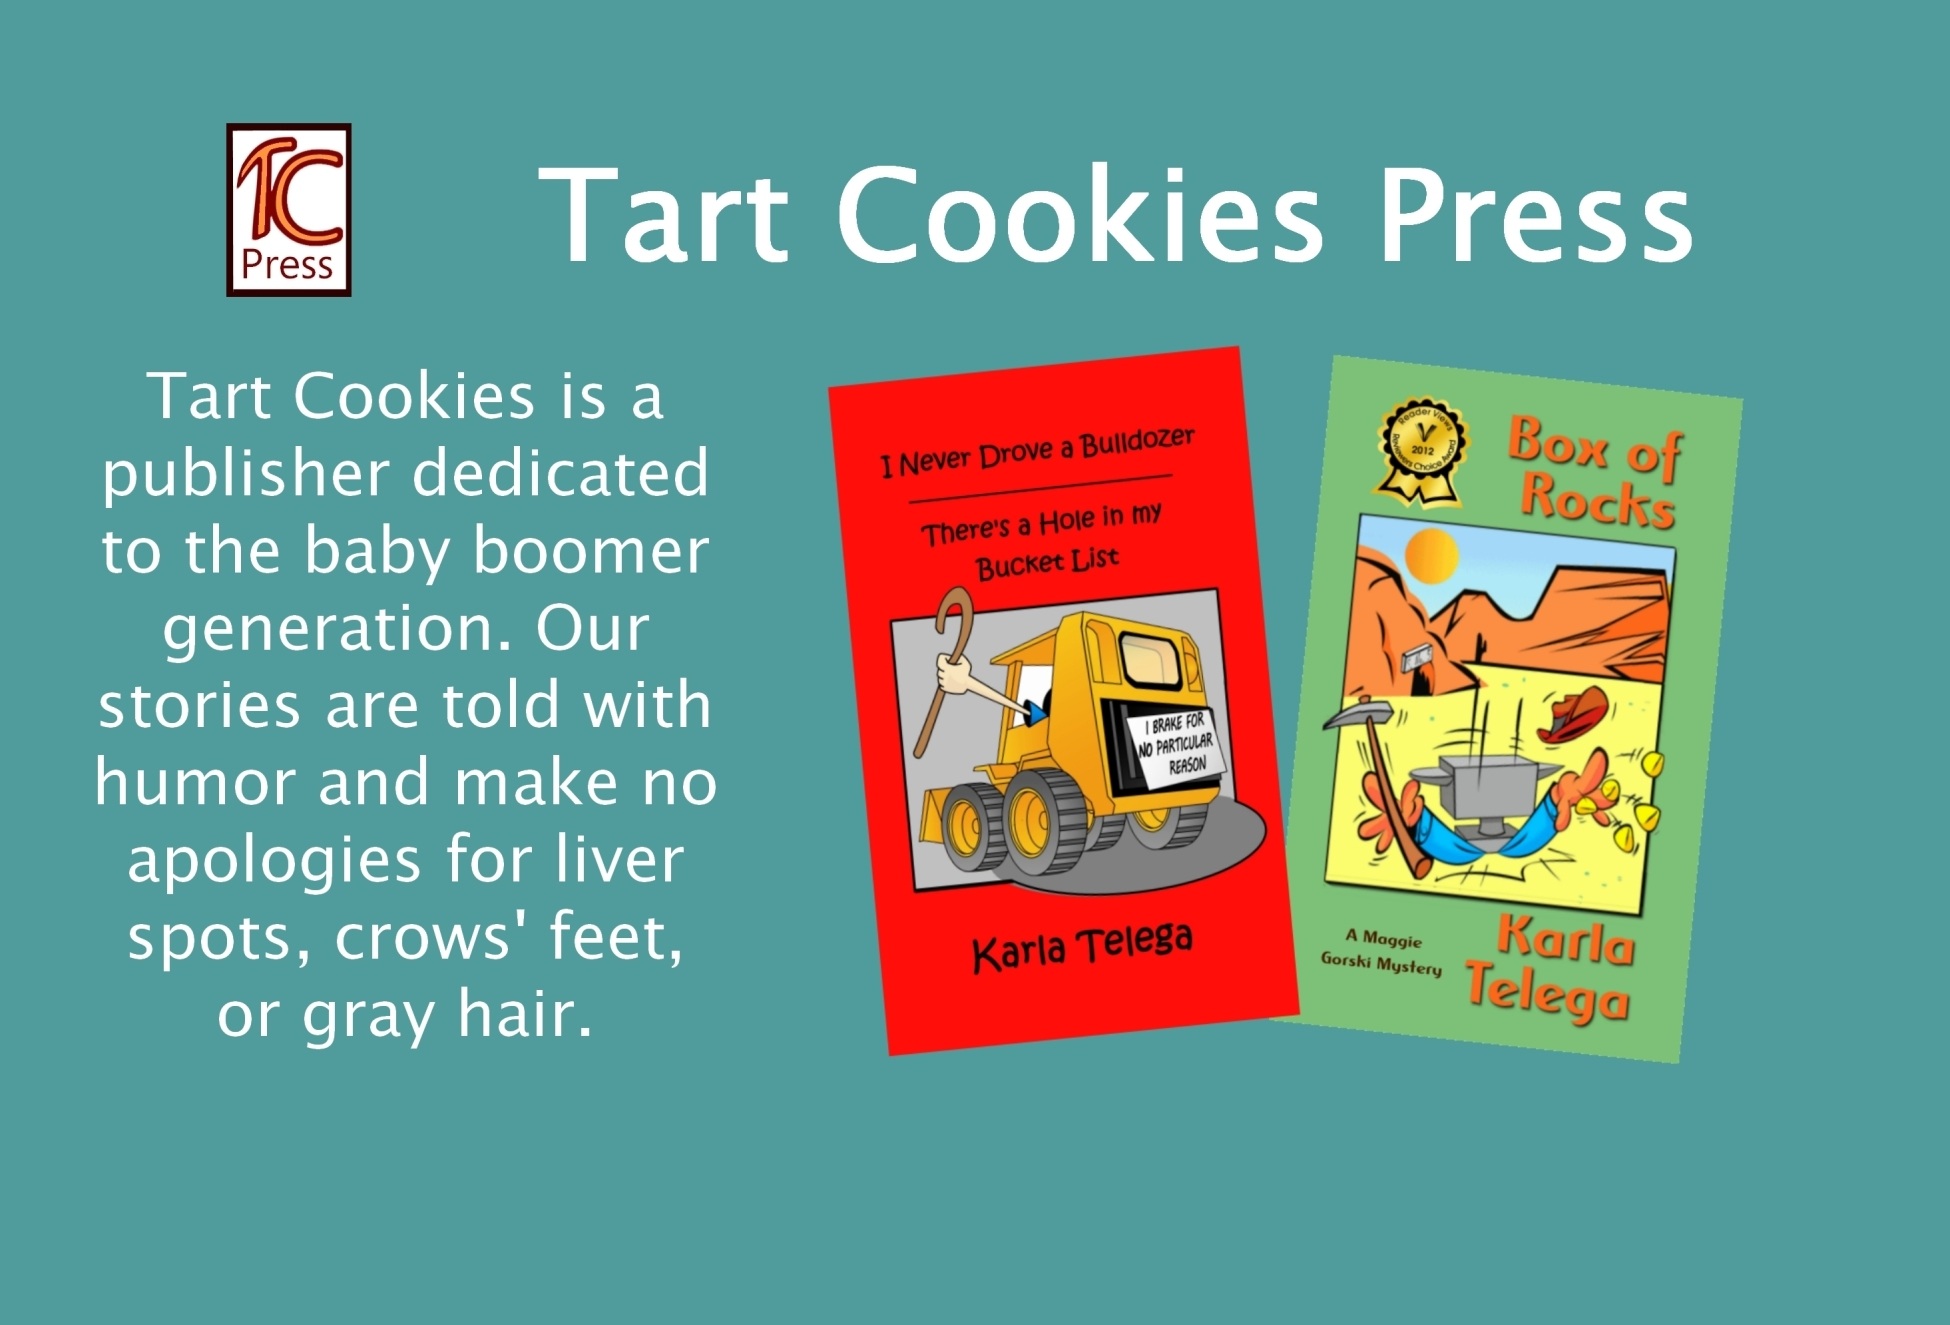 Tart Cookies web page